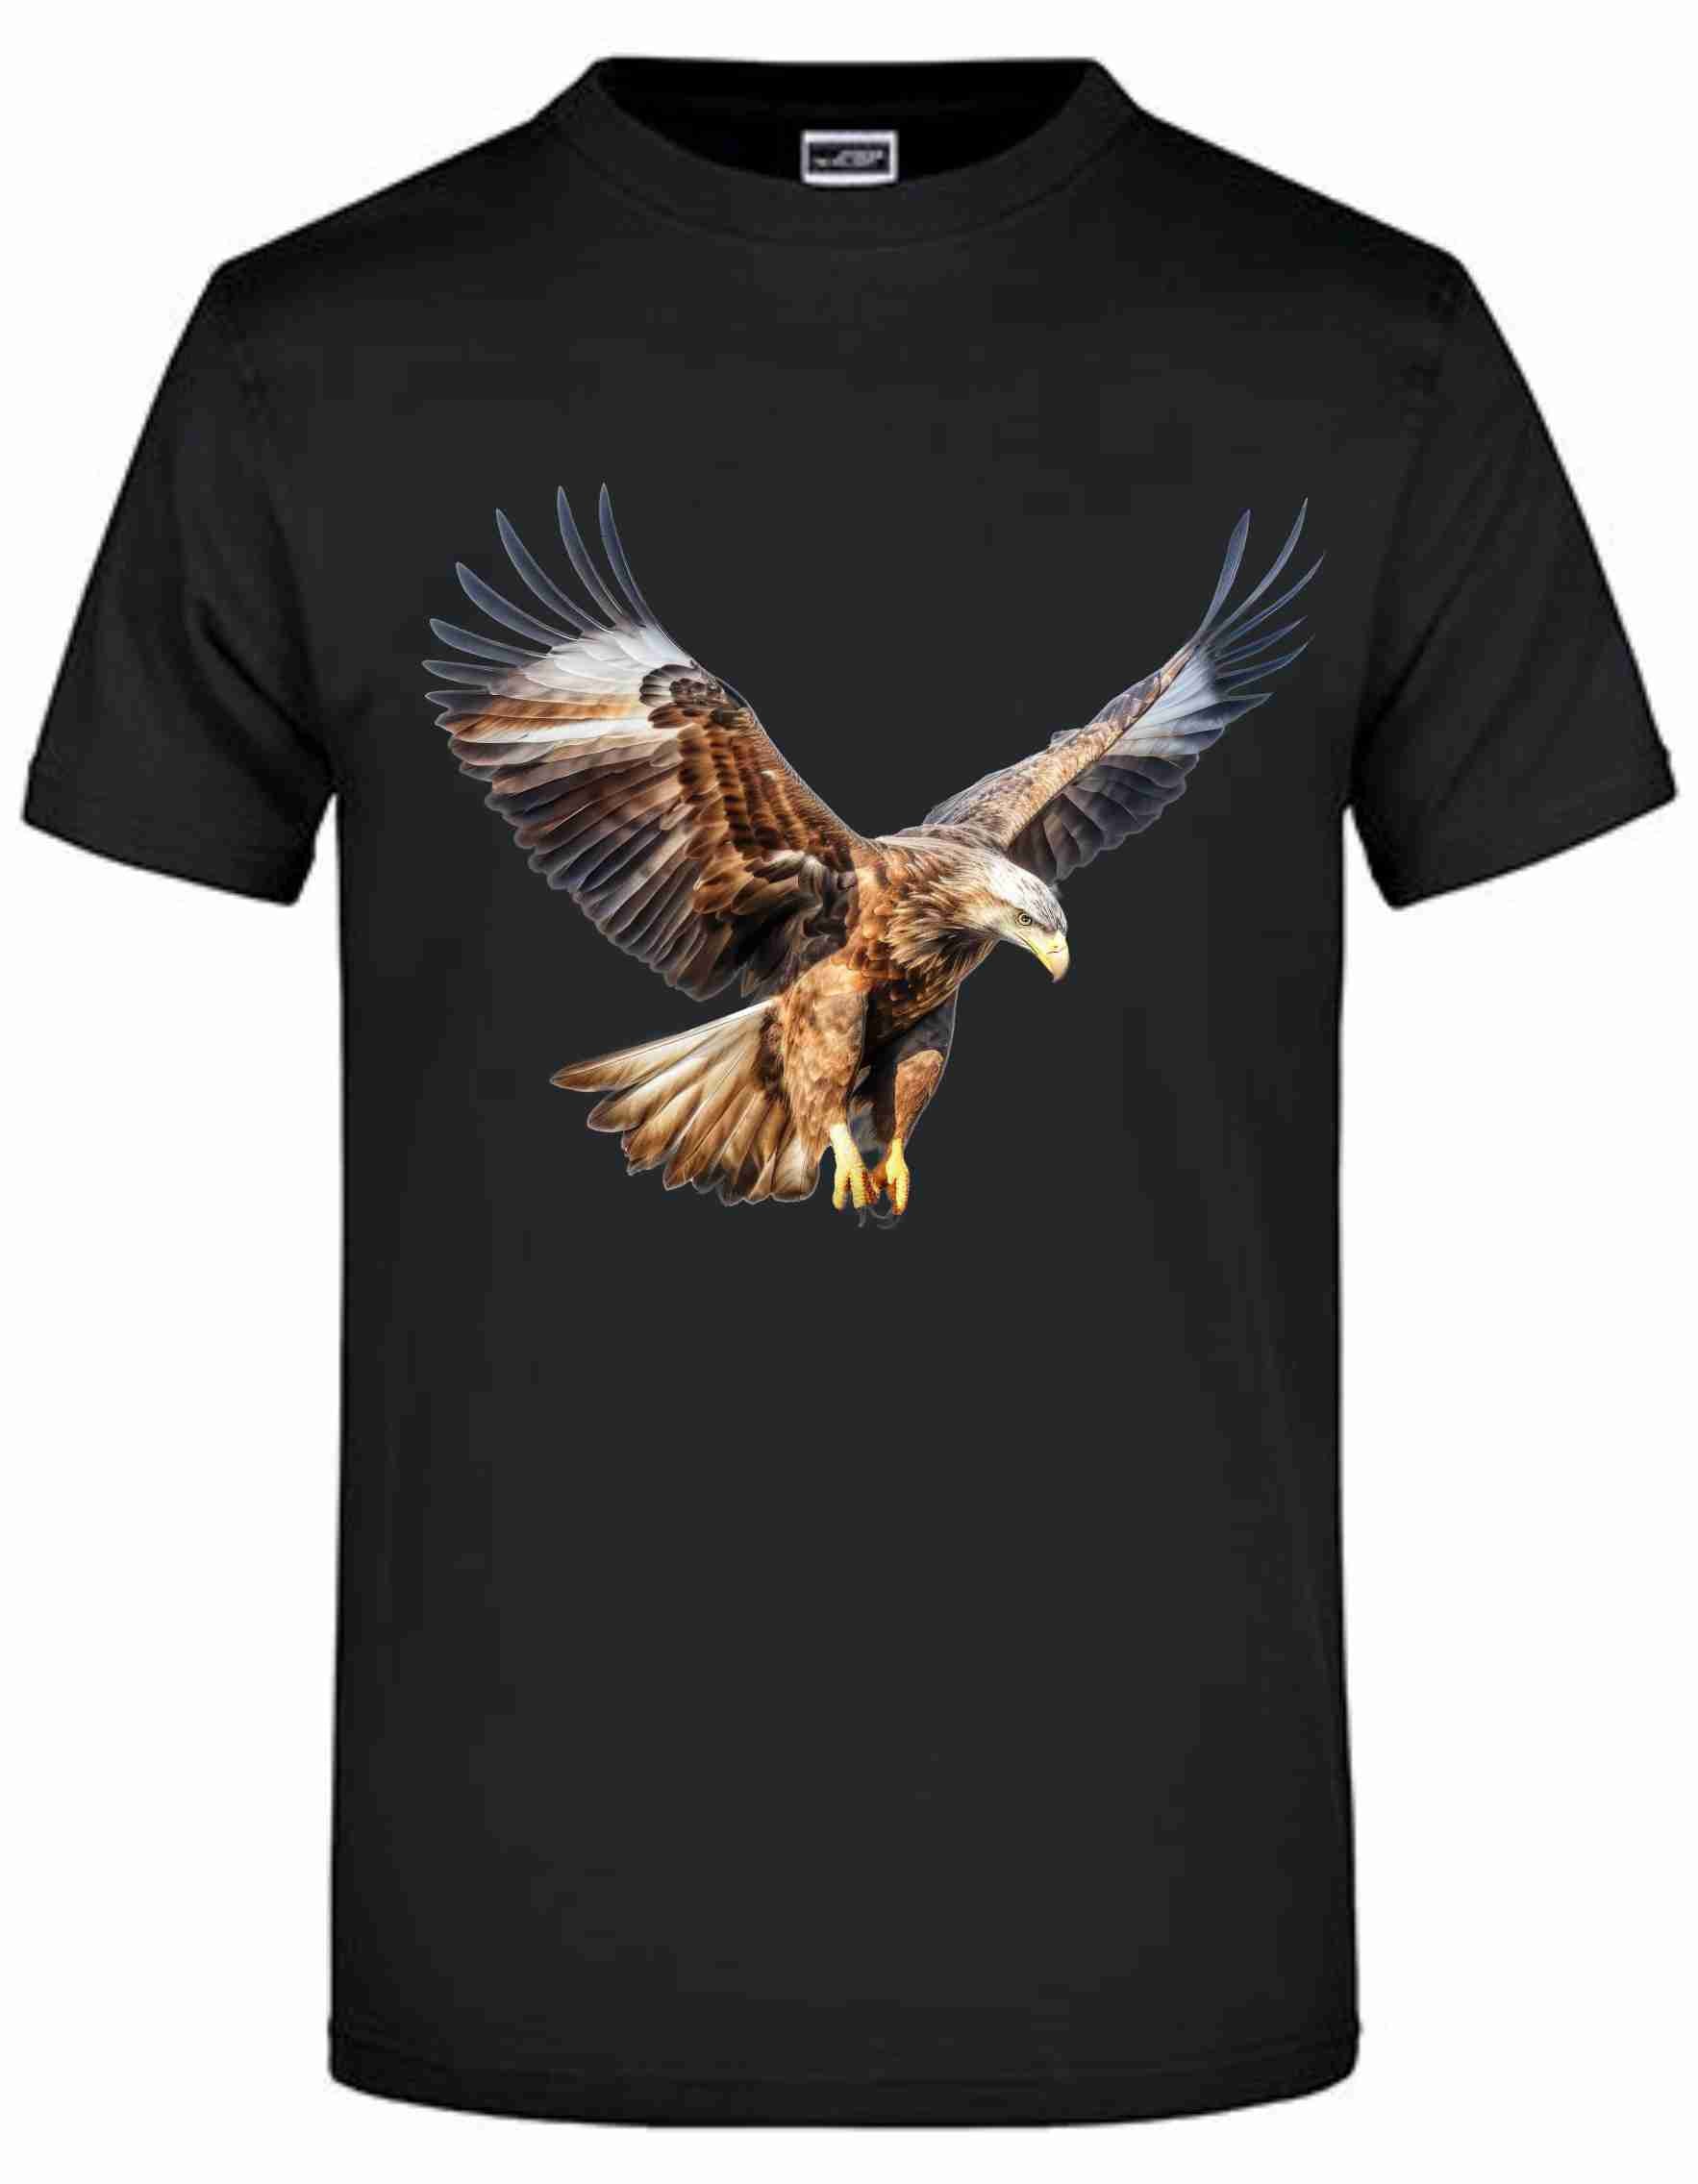 Adler (Eagle) T-Shirt auch zum selbst gestalten bei tex-druck.de